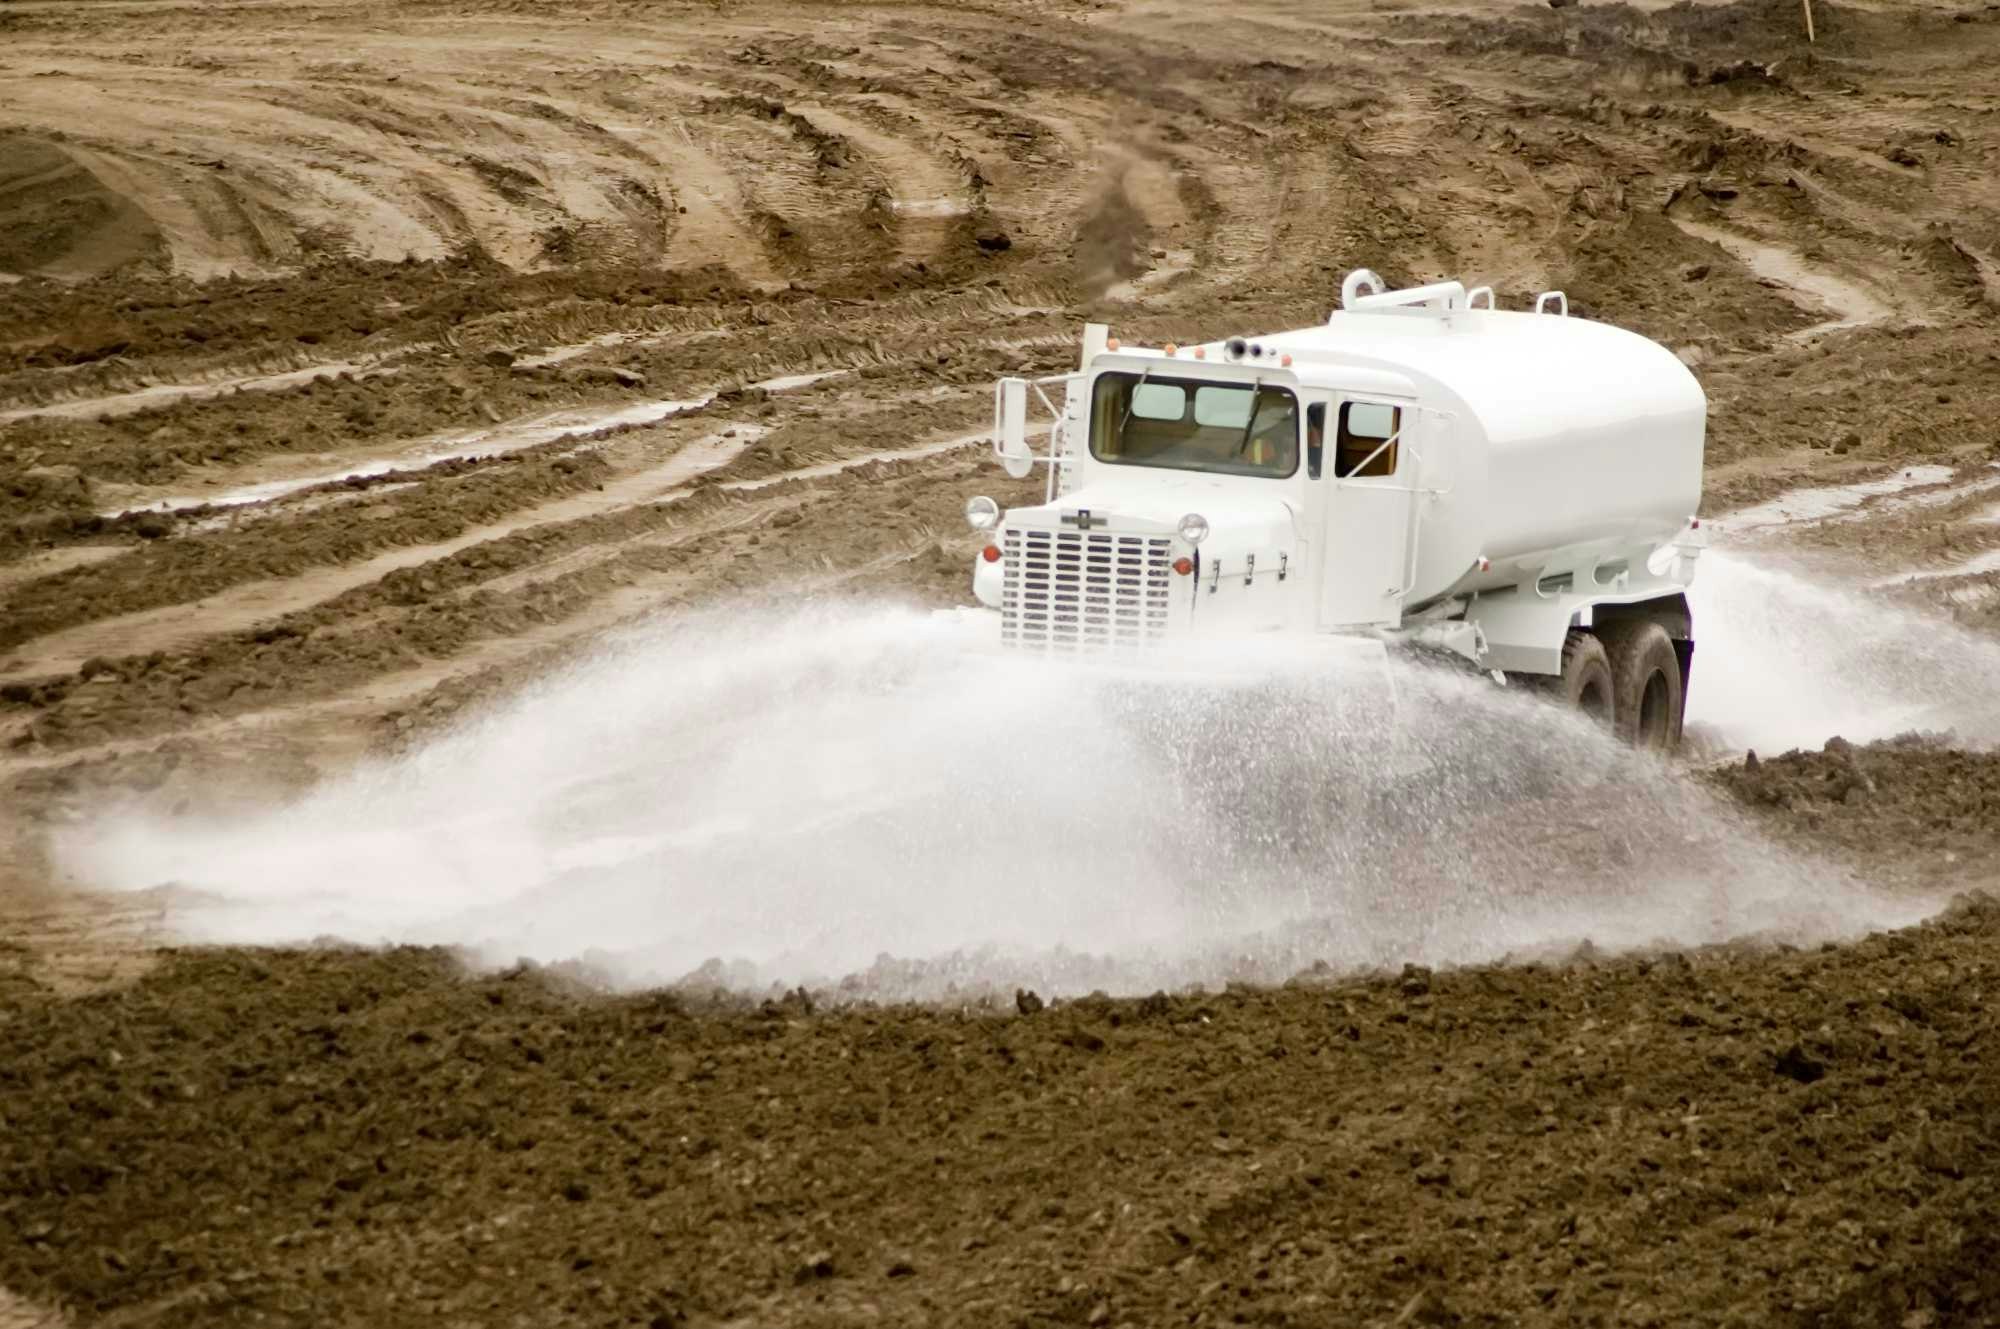 Peaceland water truck spraying down an oilfield lease